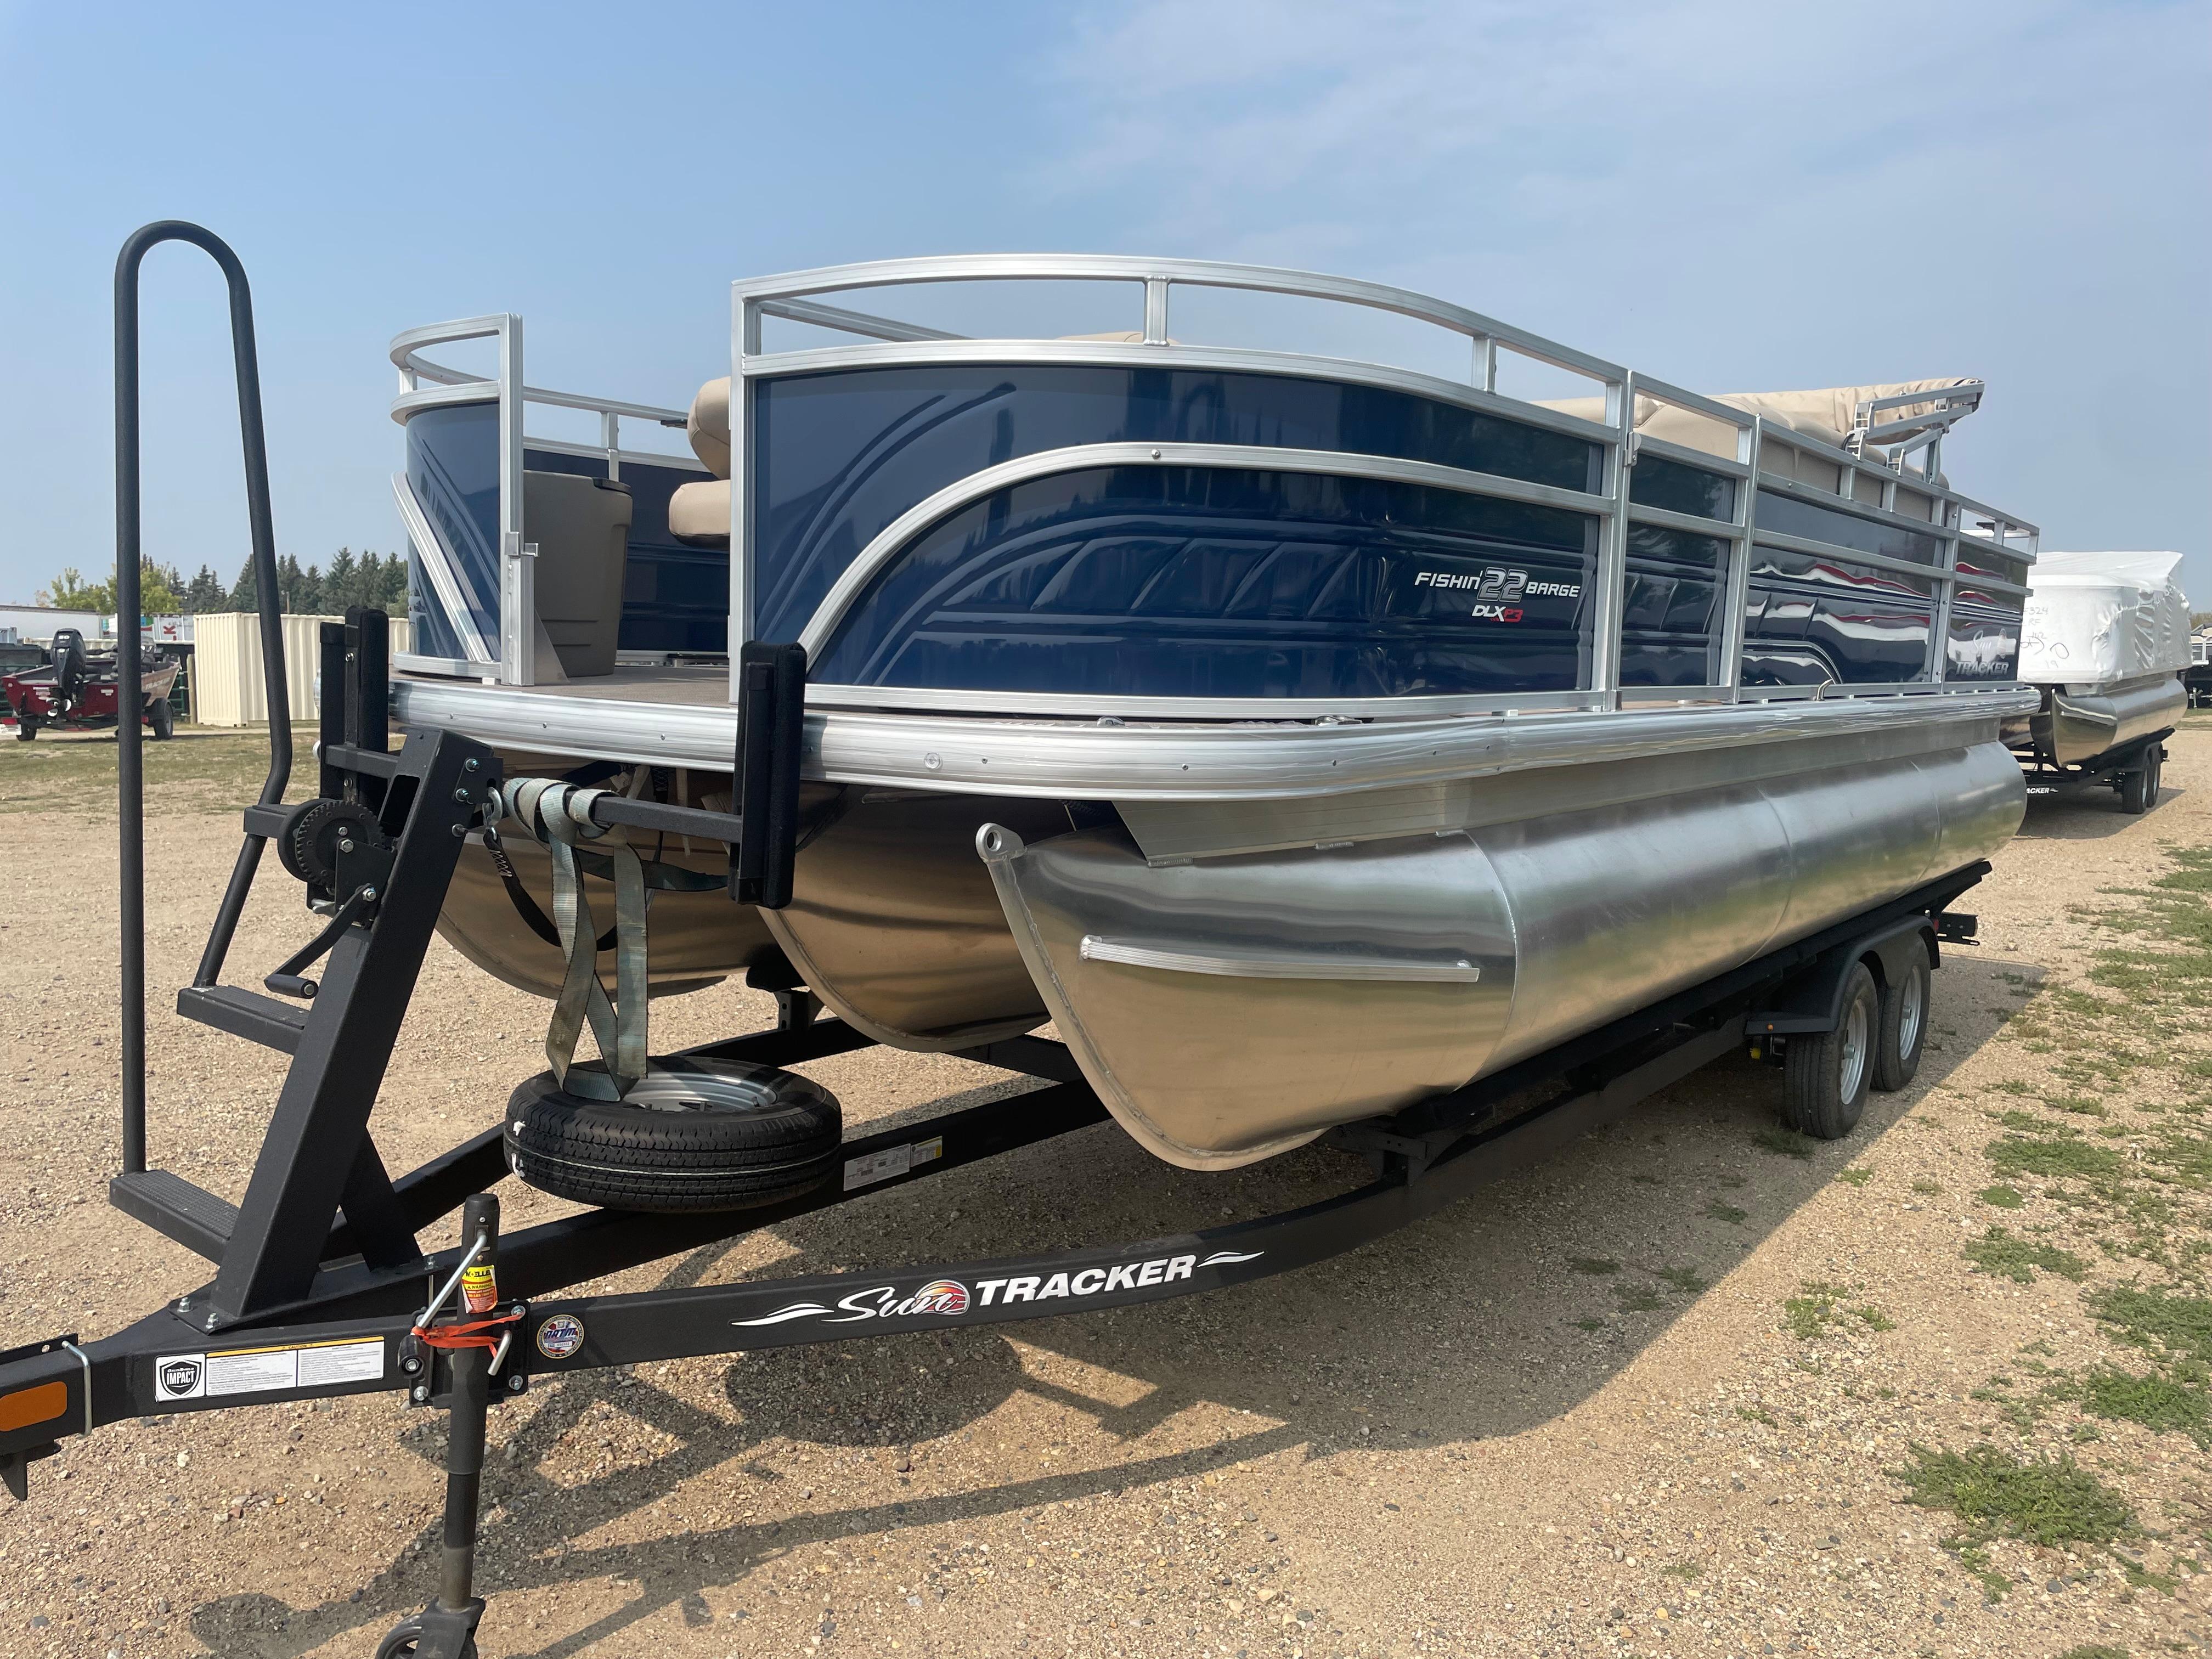 Sun Tracker Fishin' Barge 22 XP3: Boat Review / Performance Test 